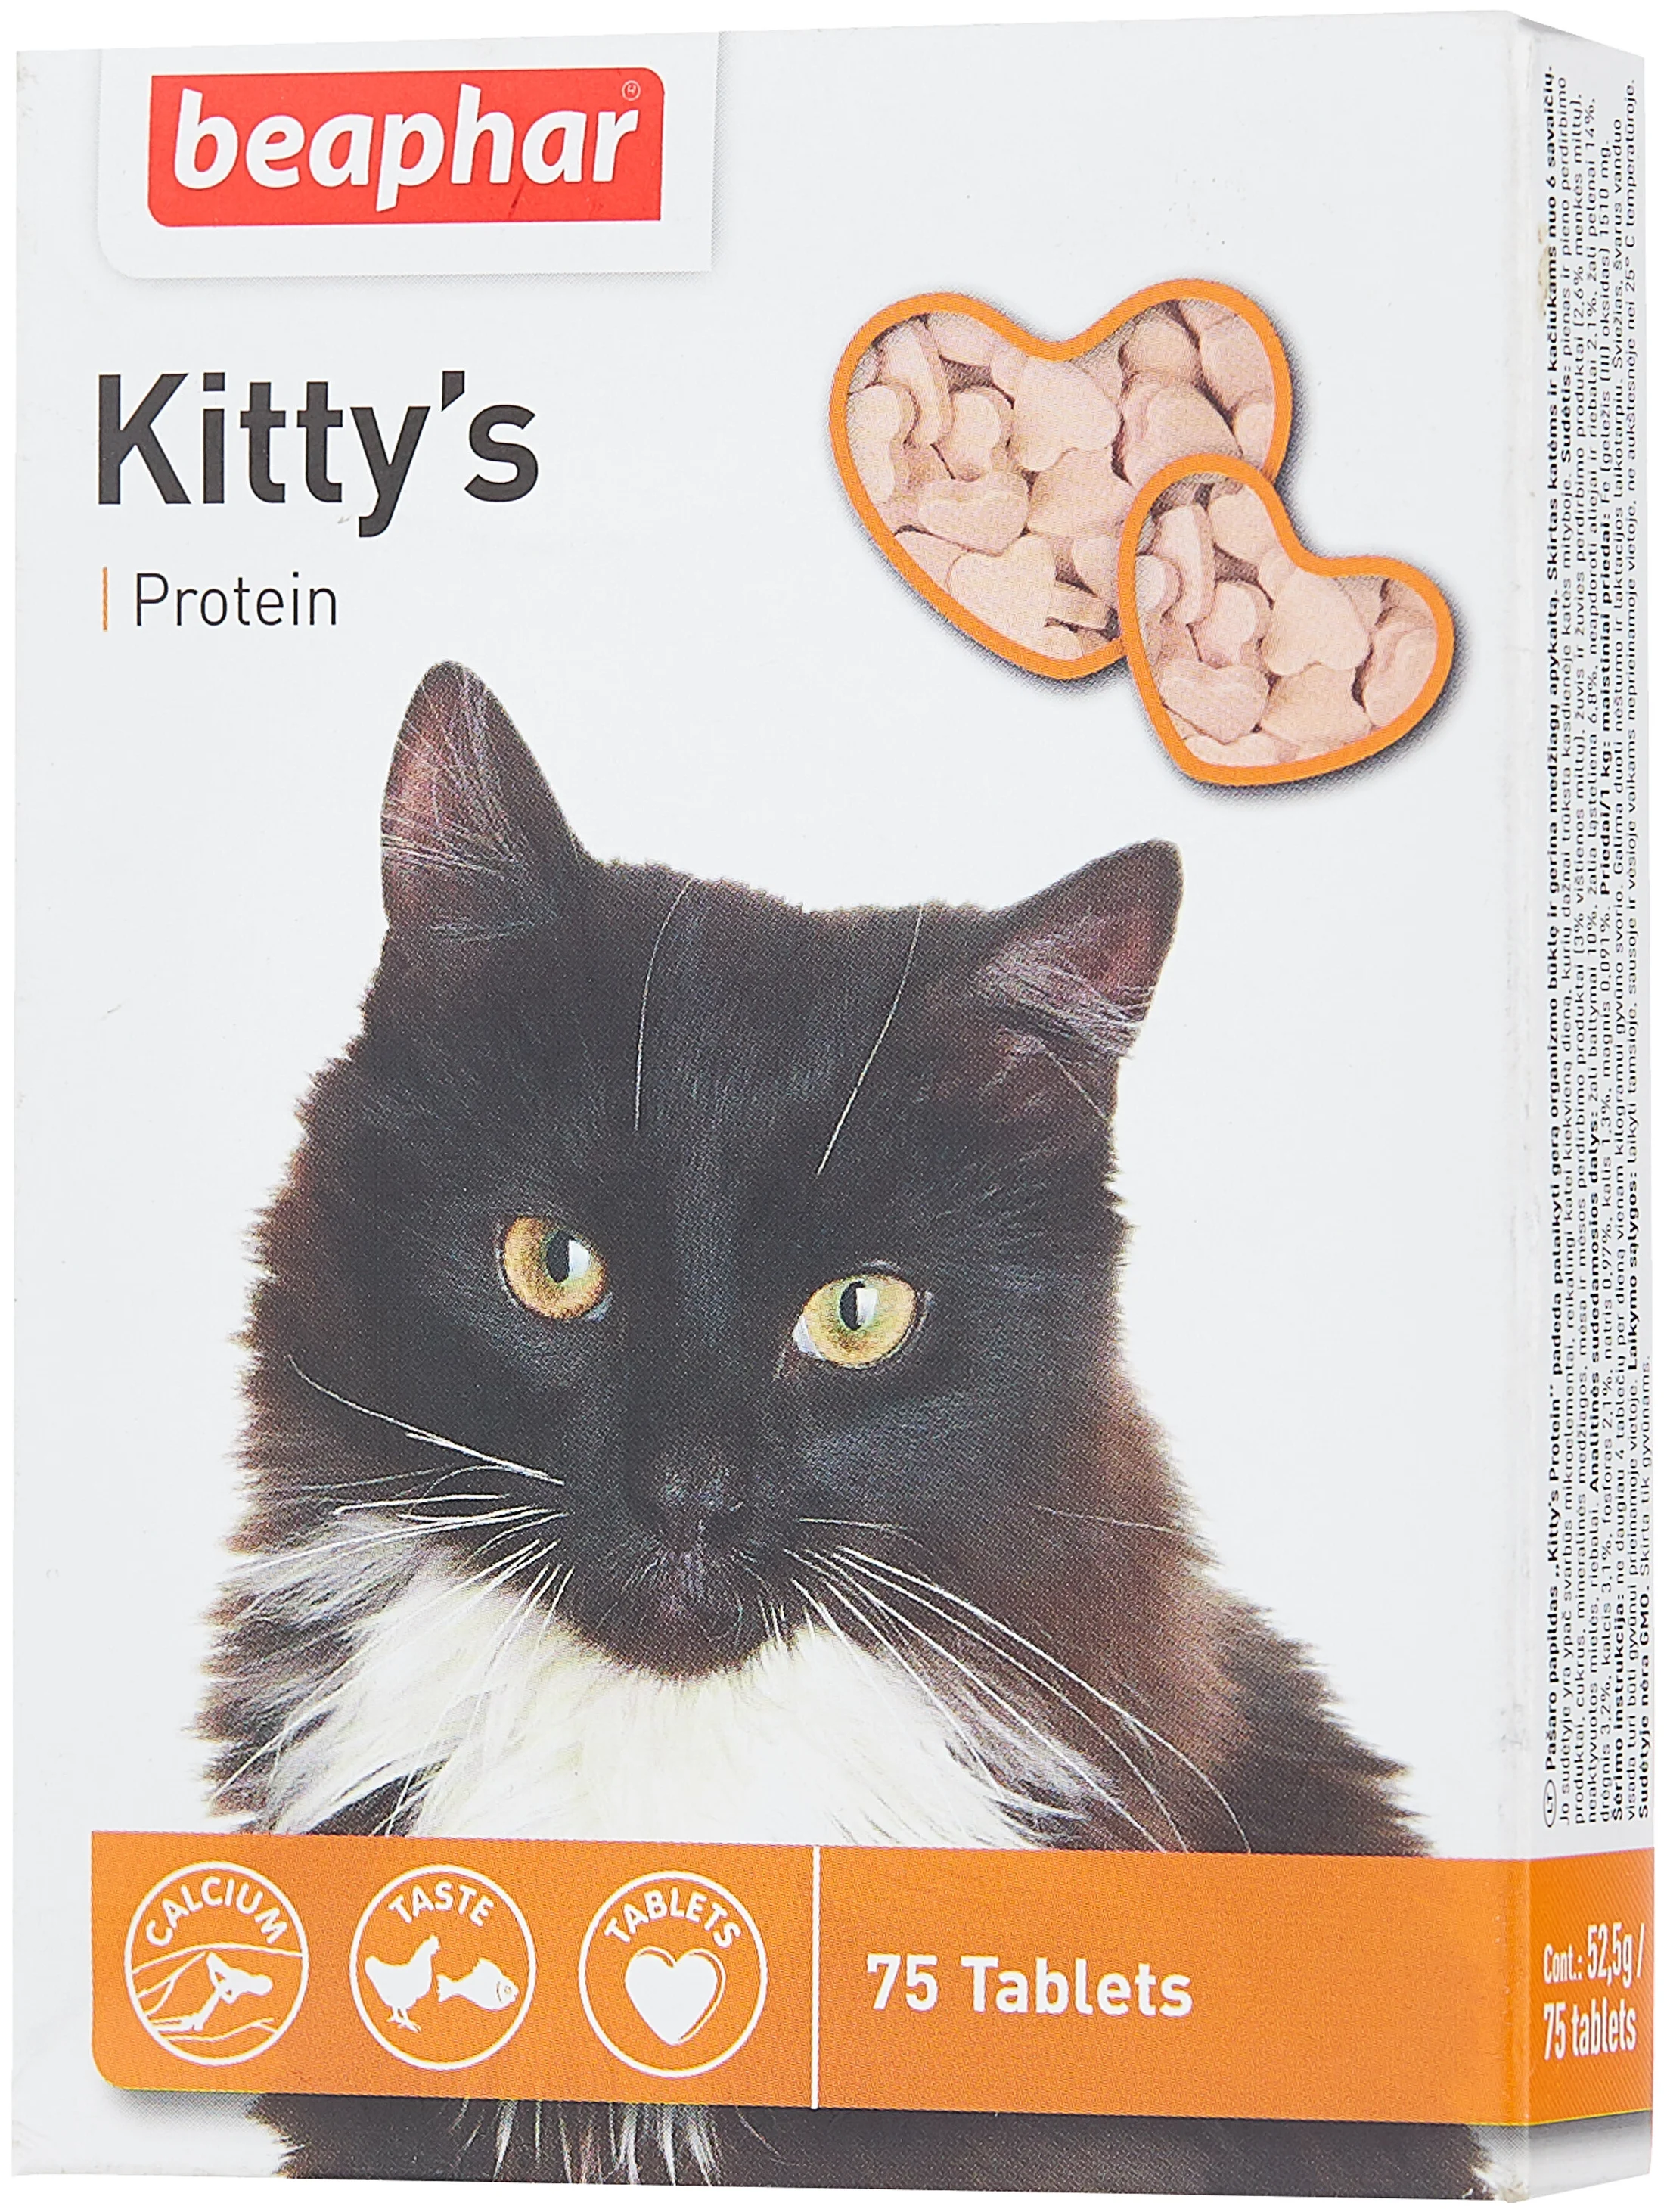 Beaphar Kitty's + Protein - назначение: для обмена веществ